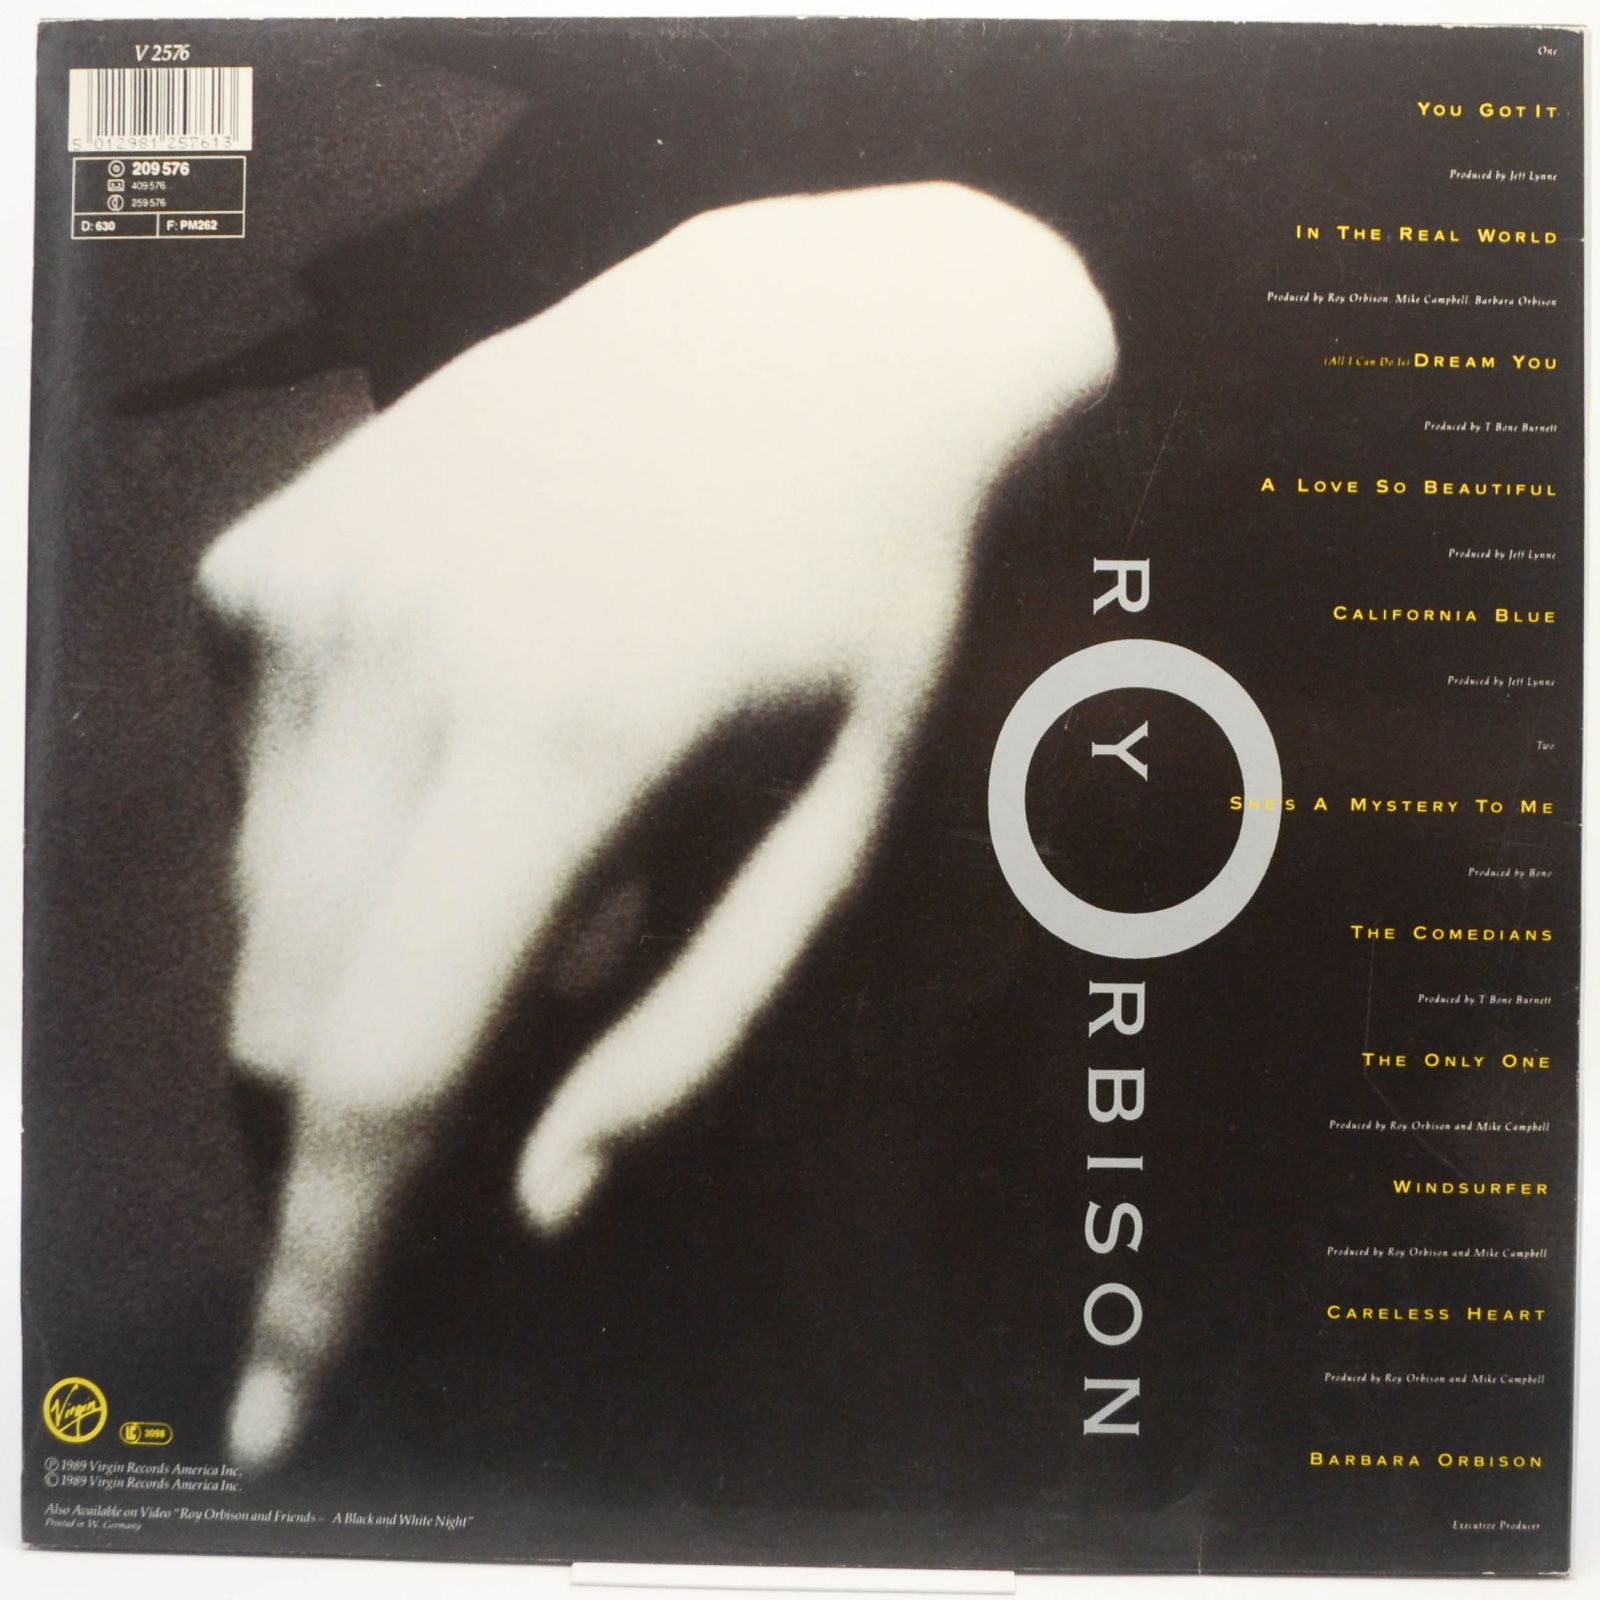 Roy Orbison — Mystery Girl, 1989